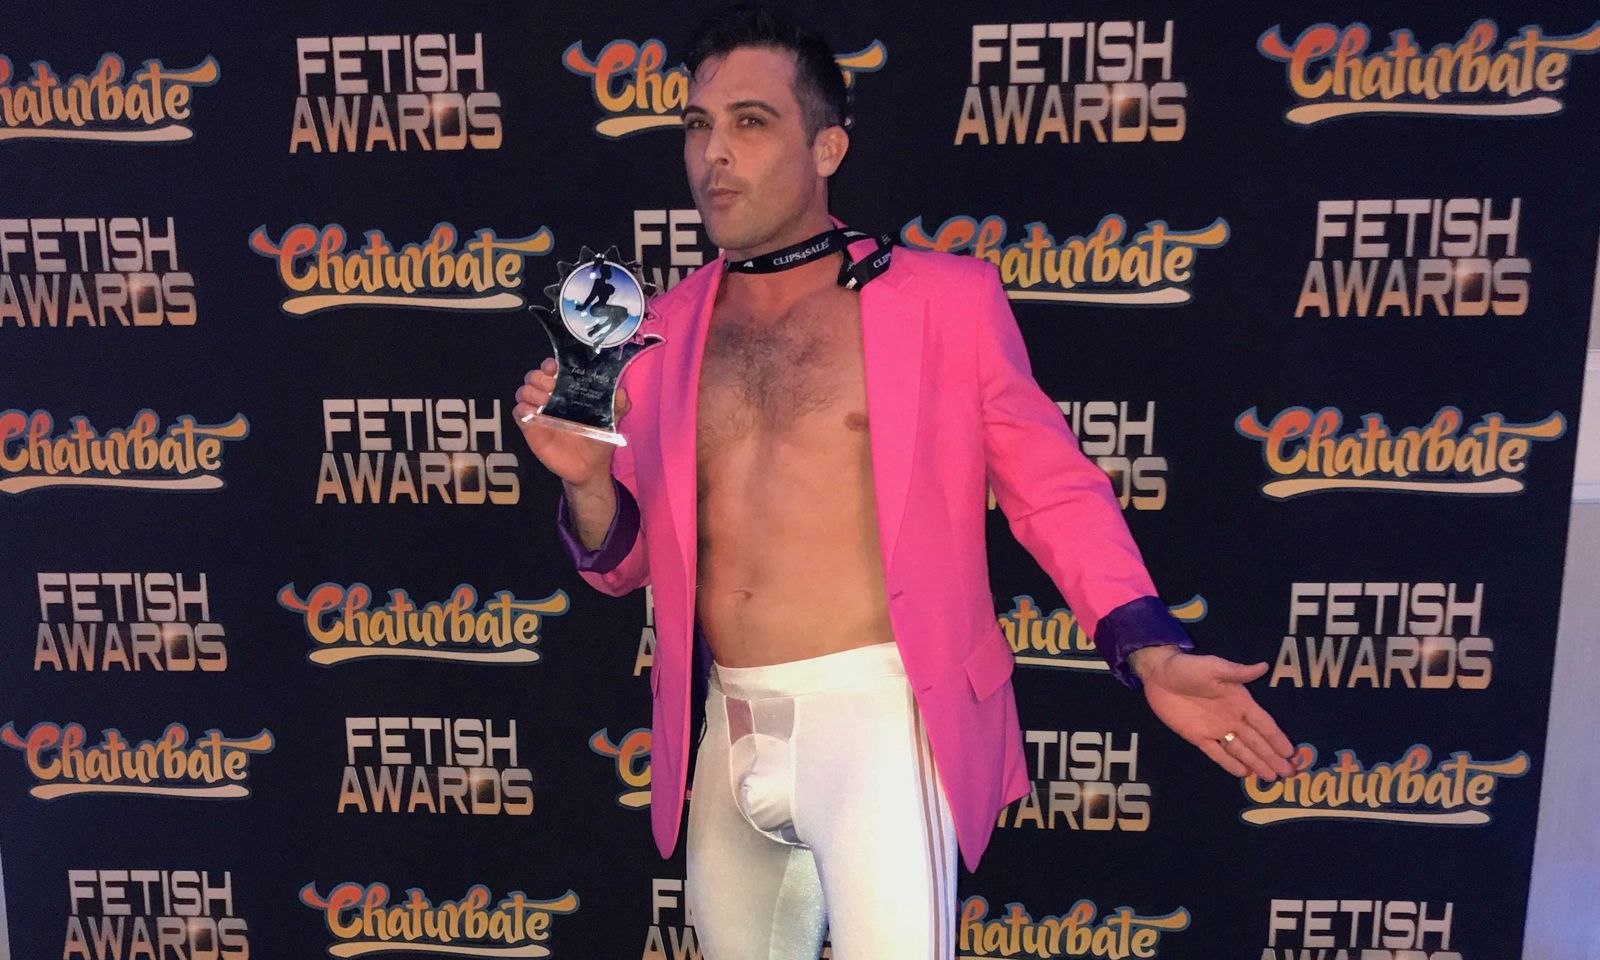 Lance Hart Wins at Fetish Awards, Scores Pornhub Awards Nom